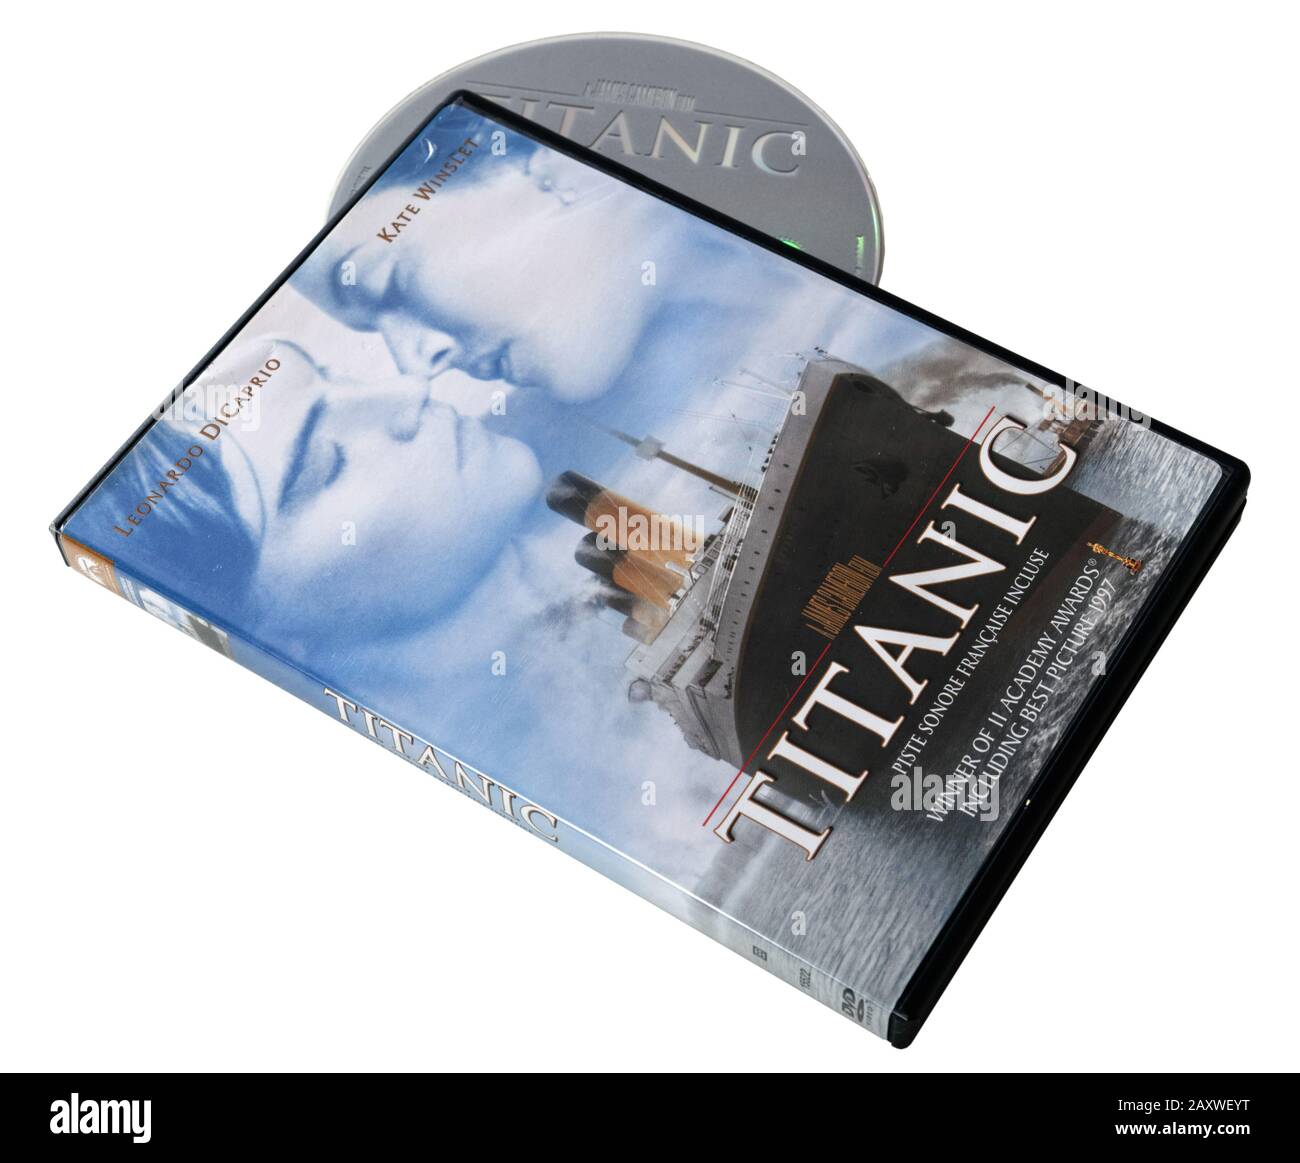 Titanic film with Leonardi DiCaprio and Kate Winslet on DVD Stock Photo -  Alamy